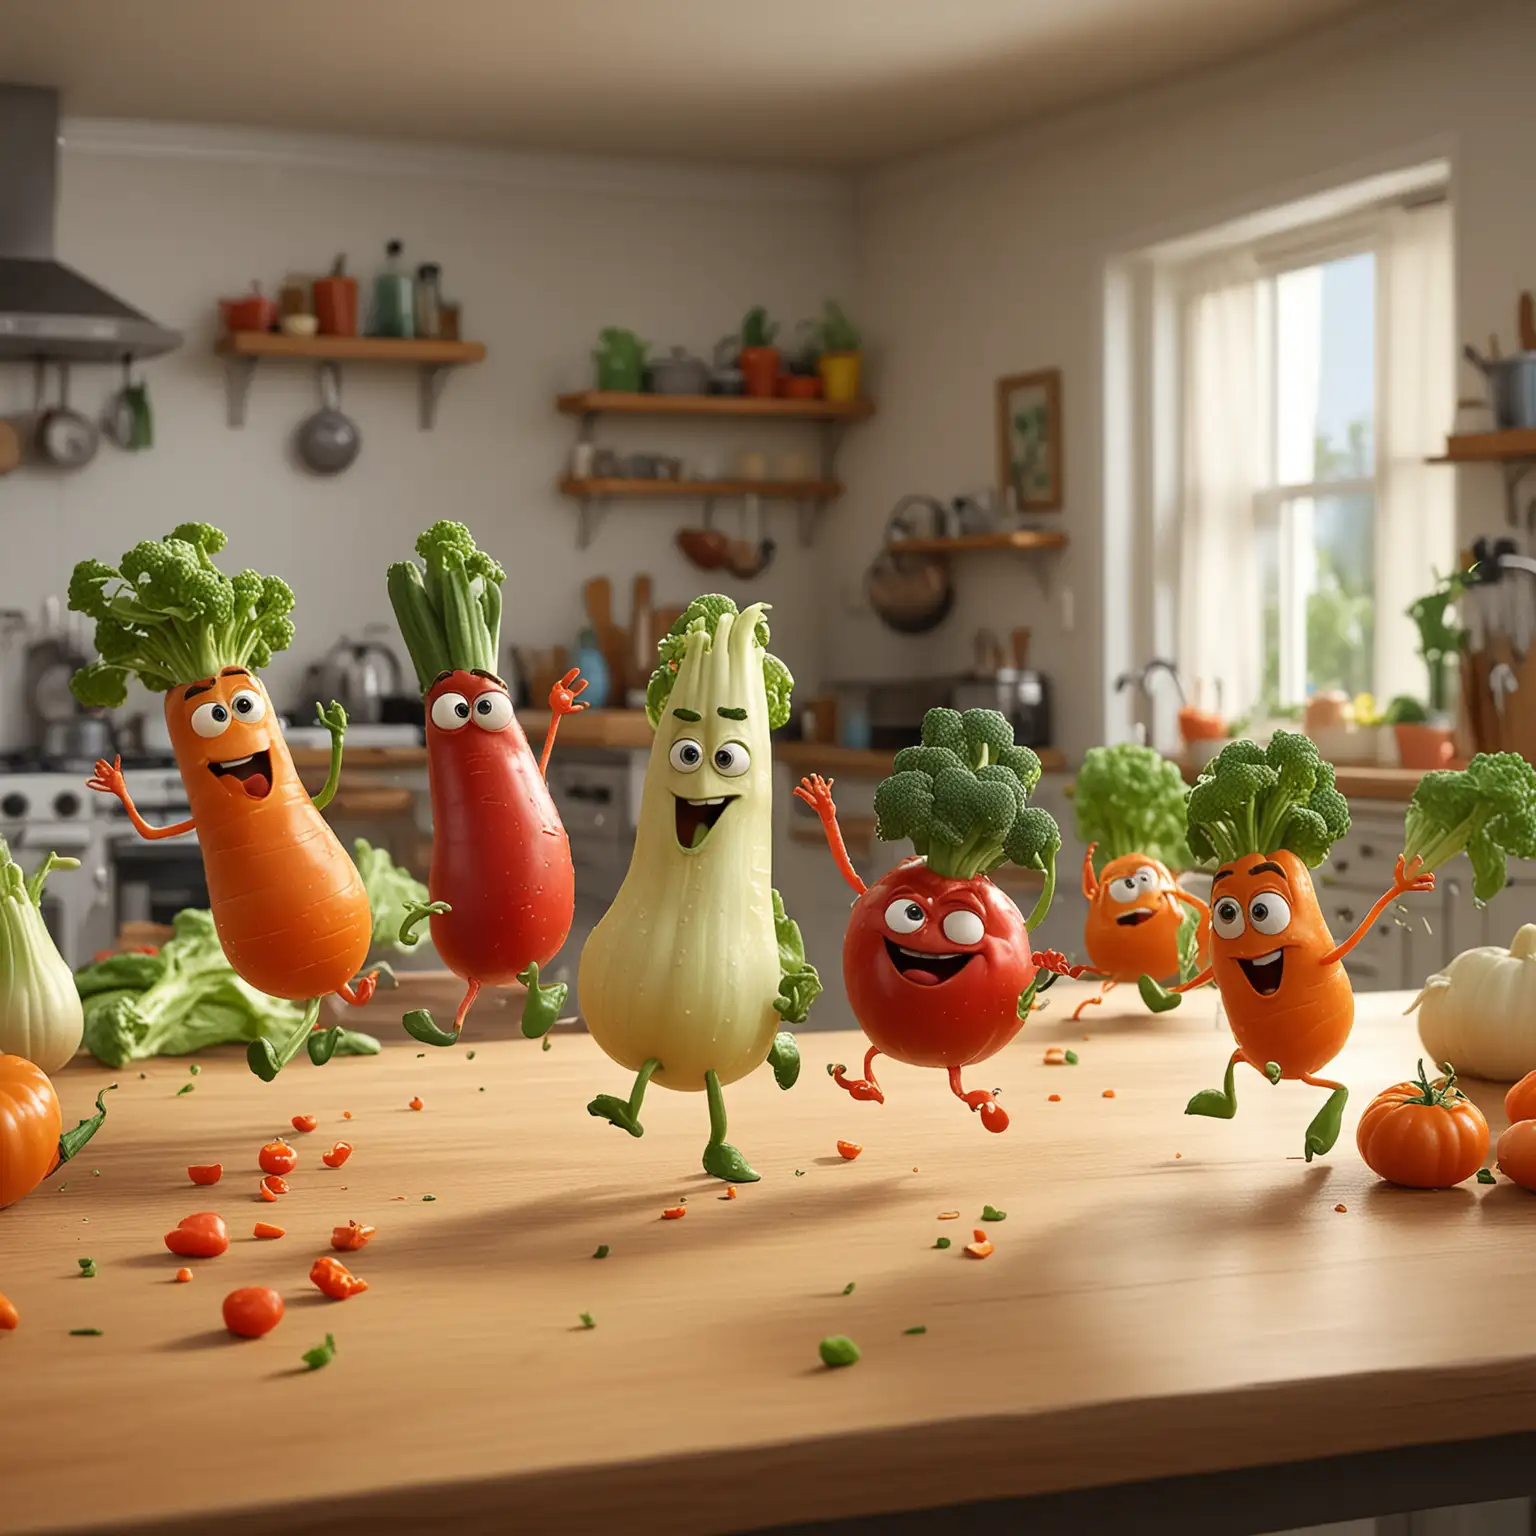 Whimsical Pixar Style Vegetable Dance on Kitchen Table